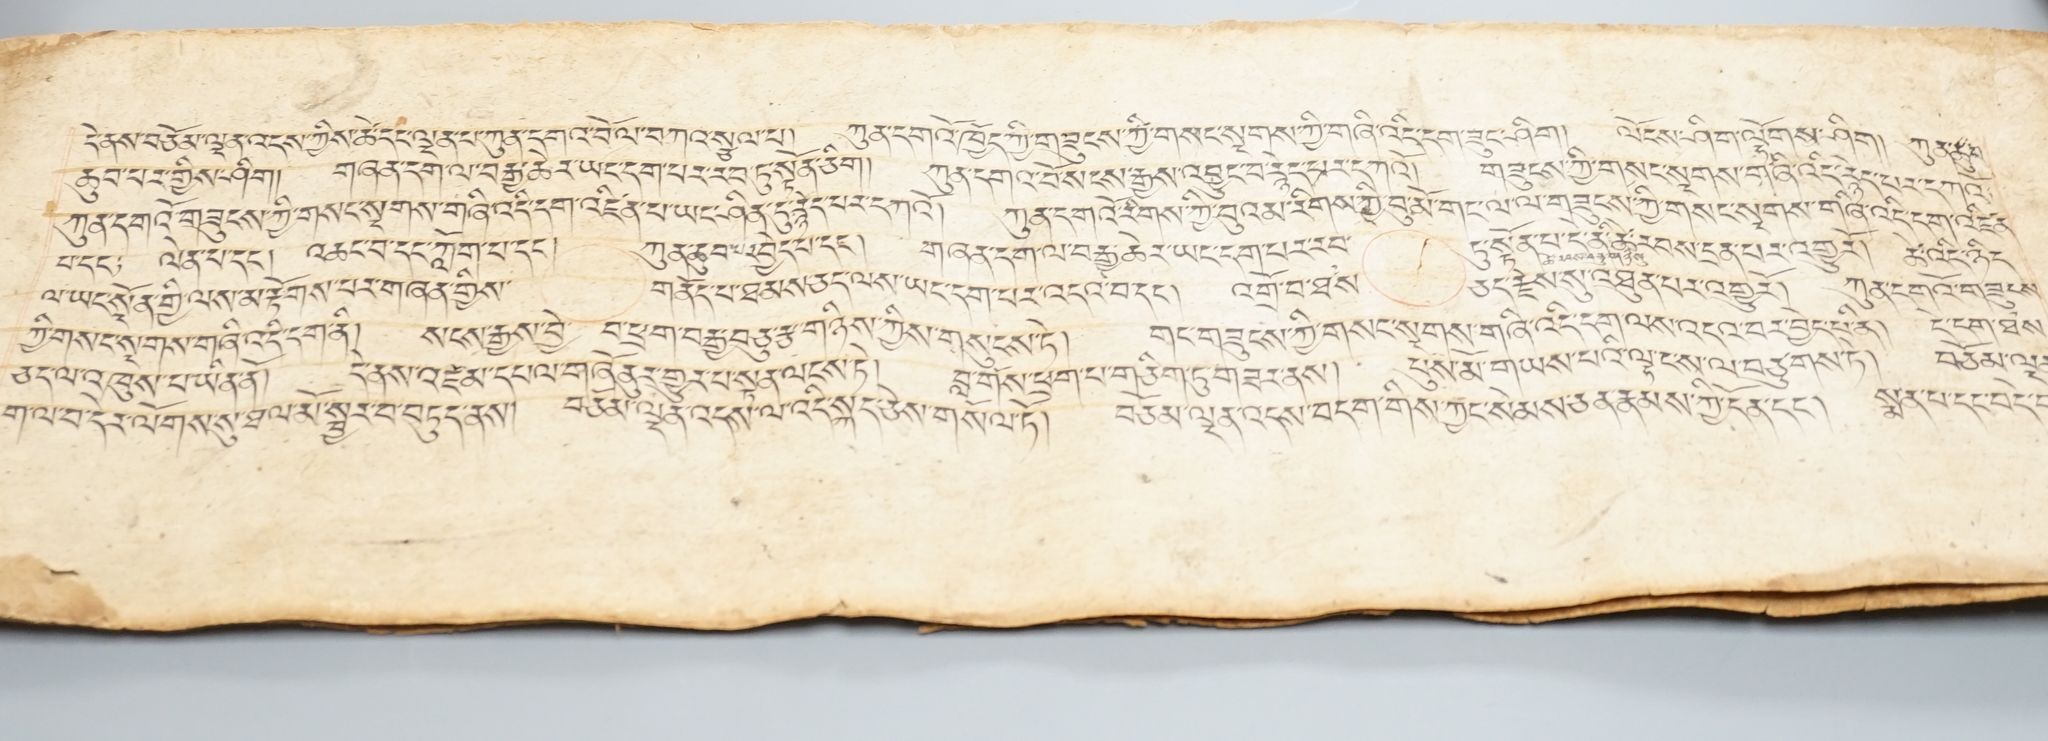 A group of Tibetan Sanskrit mantra scrolls